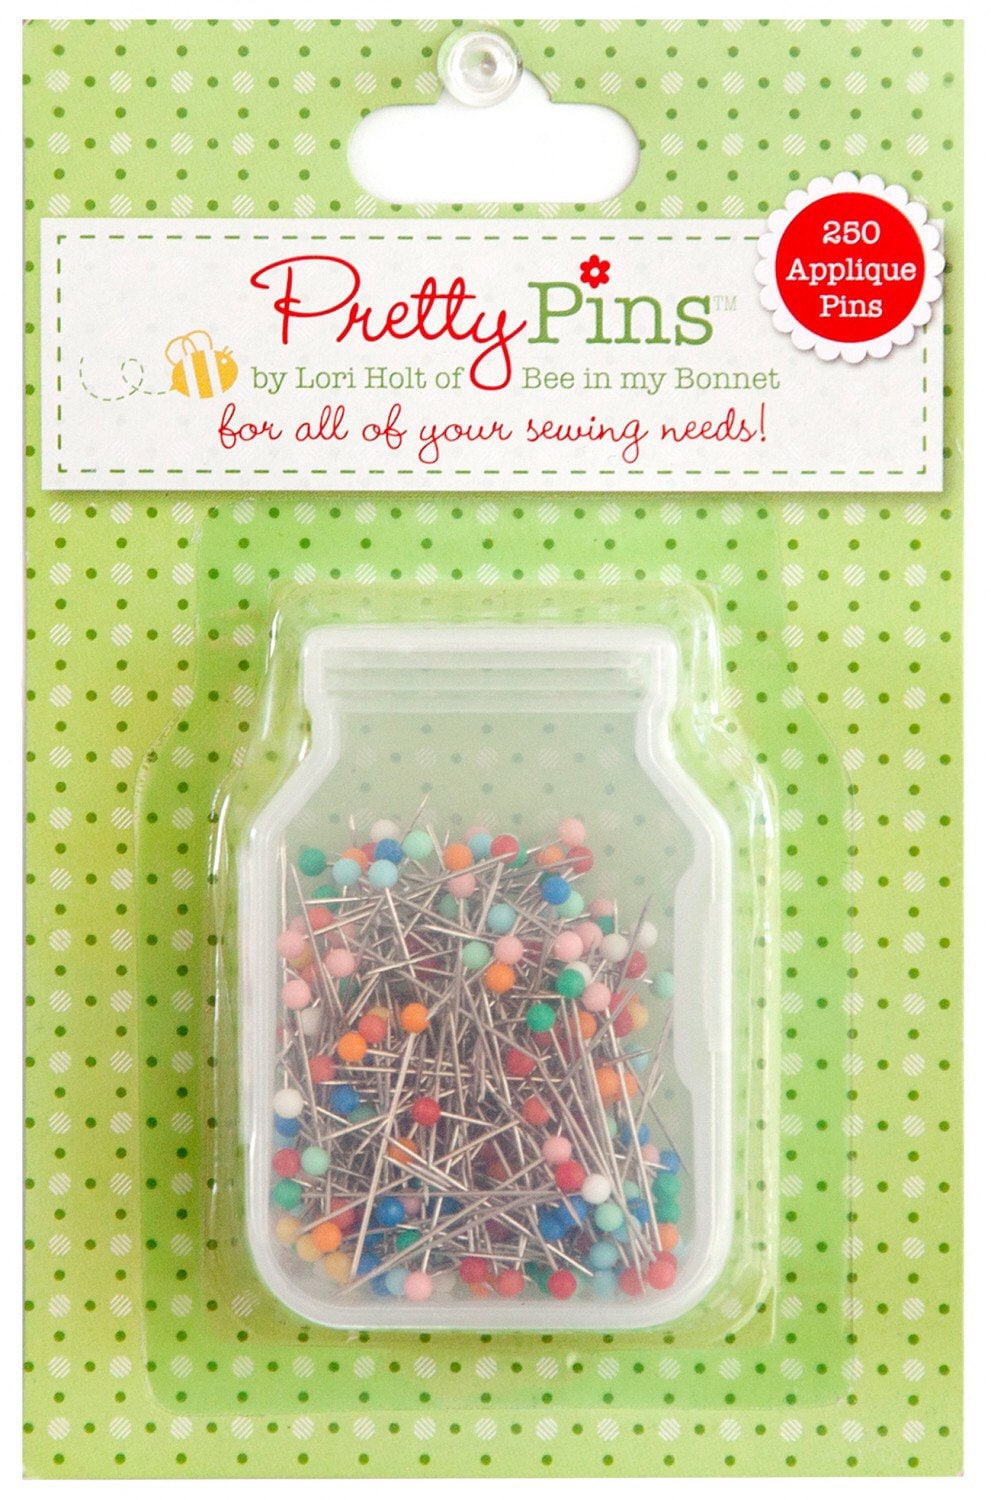 Pretty Pins - Appliqué Pins - Lori Holt - Bee In My Bonnet - 250 Pack